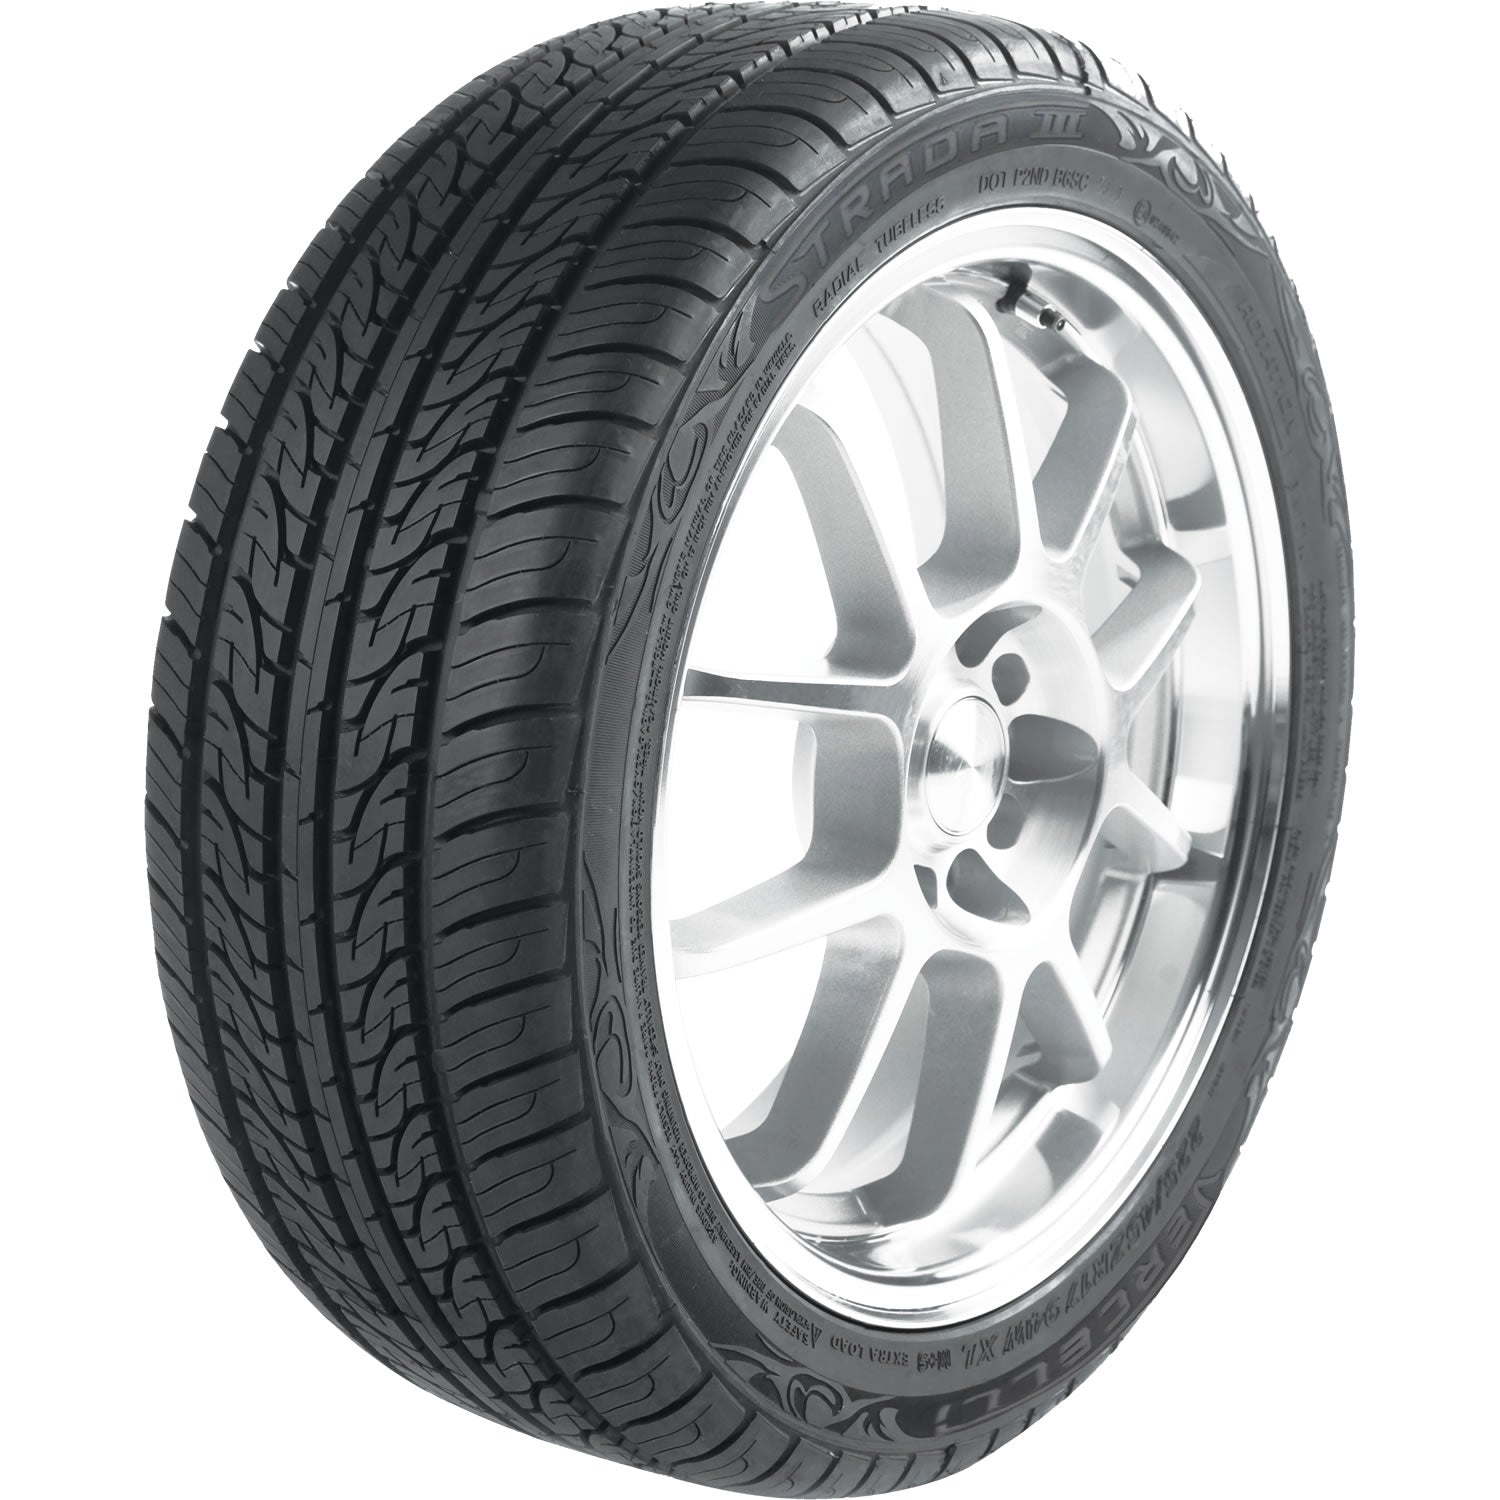 VERCELLI STRADA II 215/35ZR18 (23.9X8.6R 18) Tires